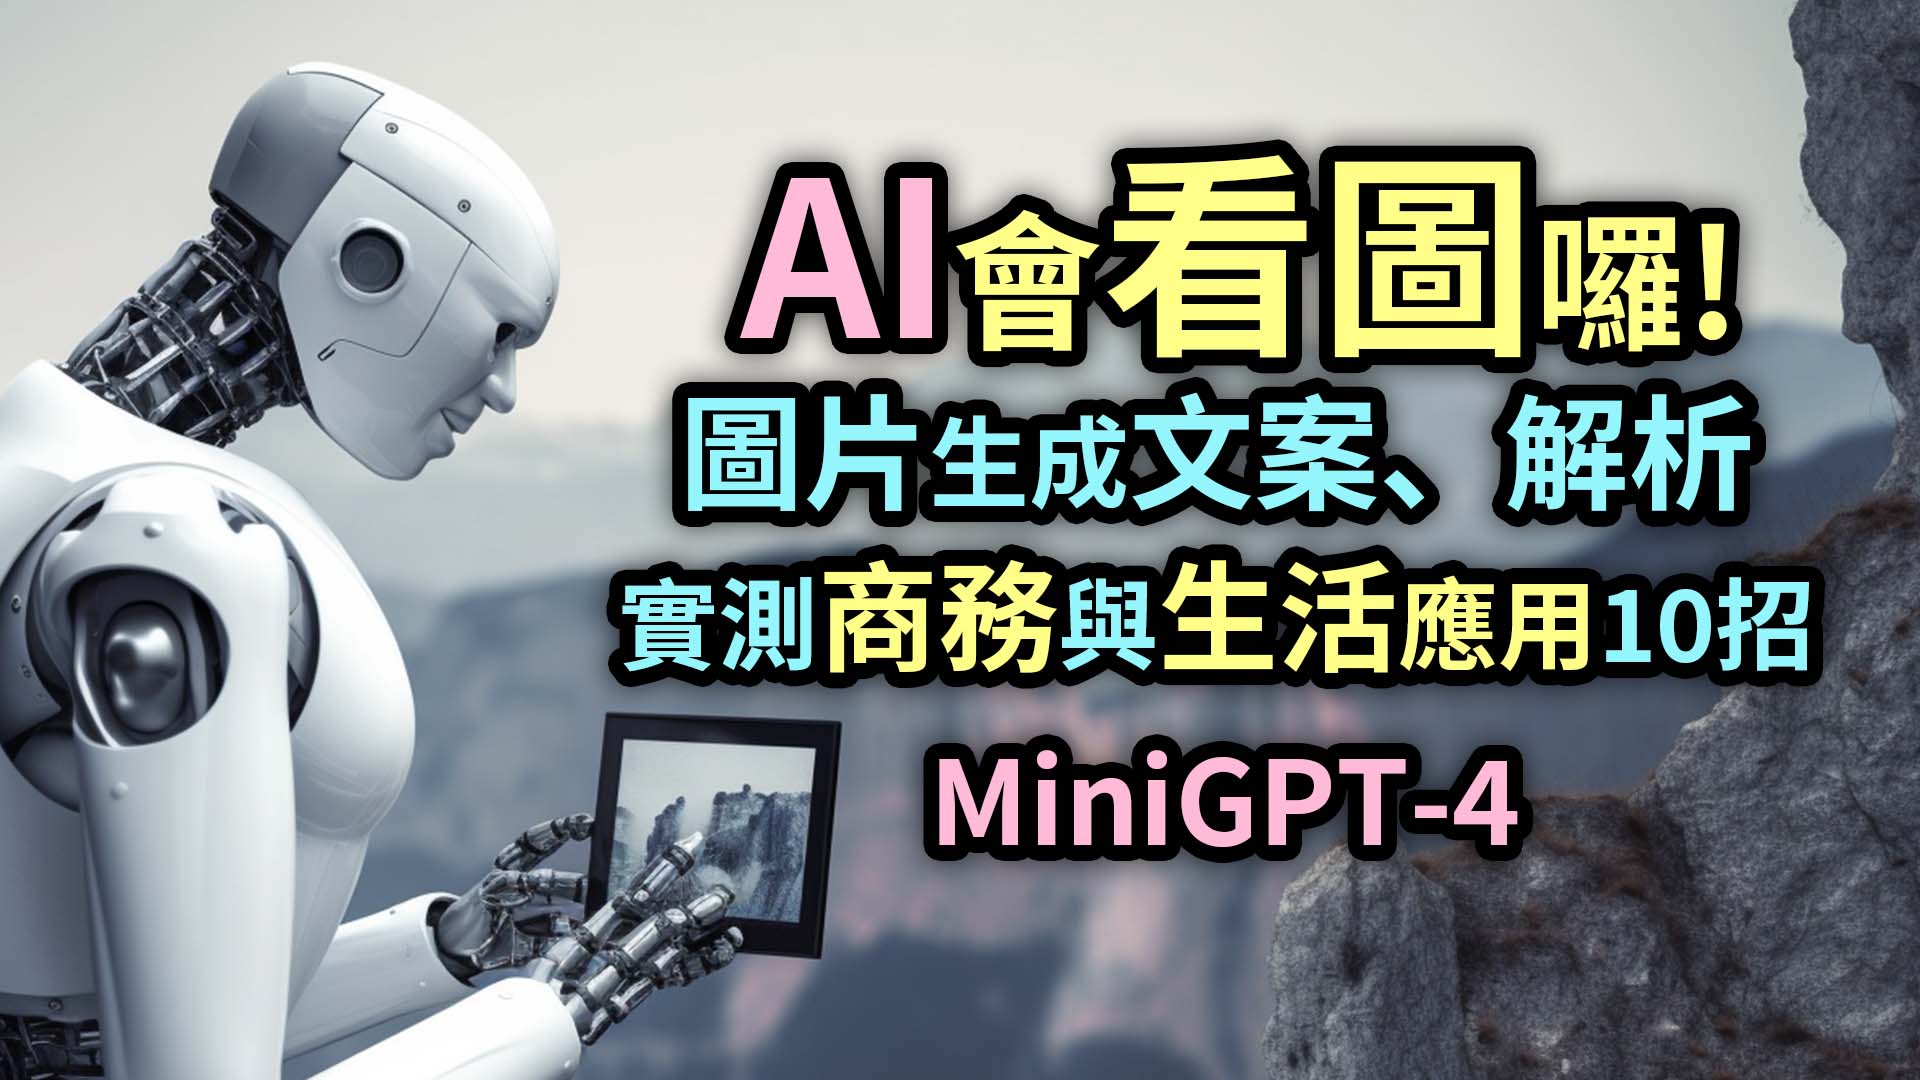 MiniGPT-4完勝ChatGPT-4，搶先開放AI圖像識別功能，實測商務與生活必用10大招術